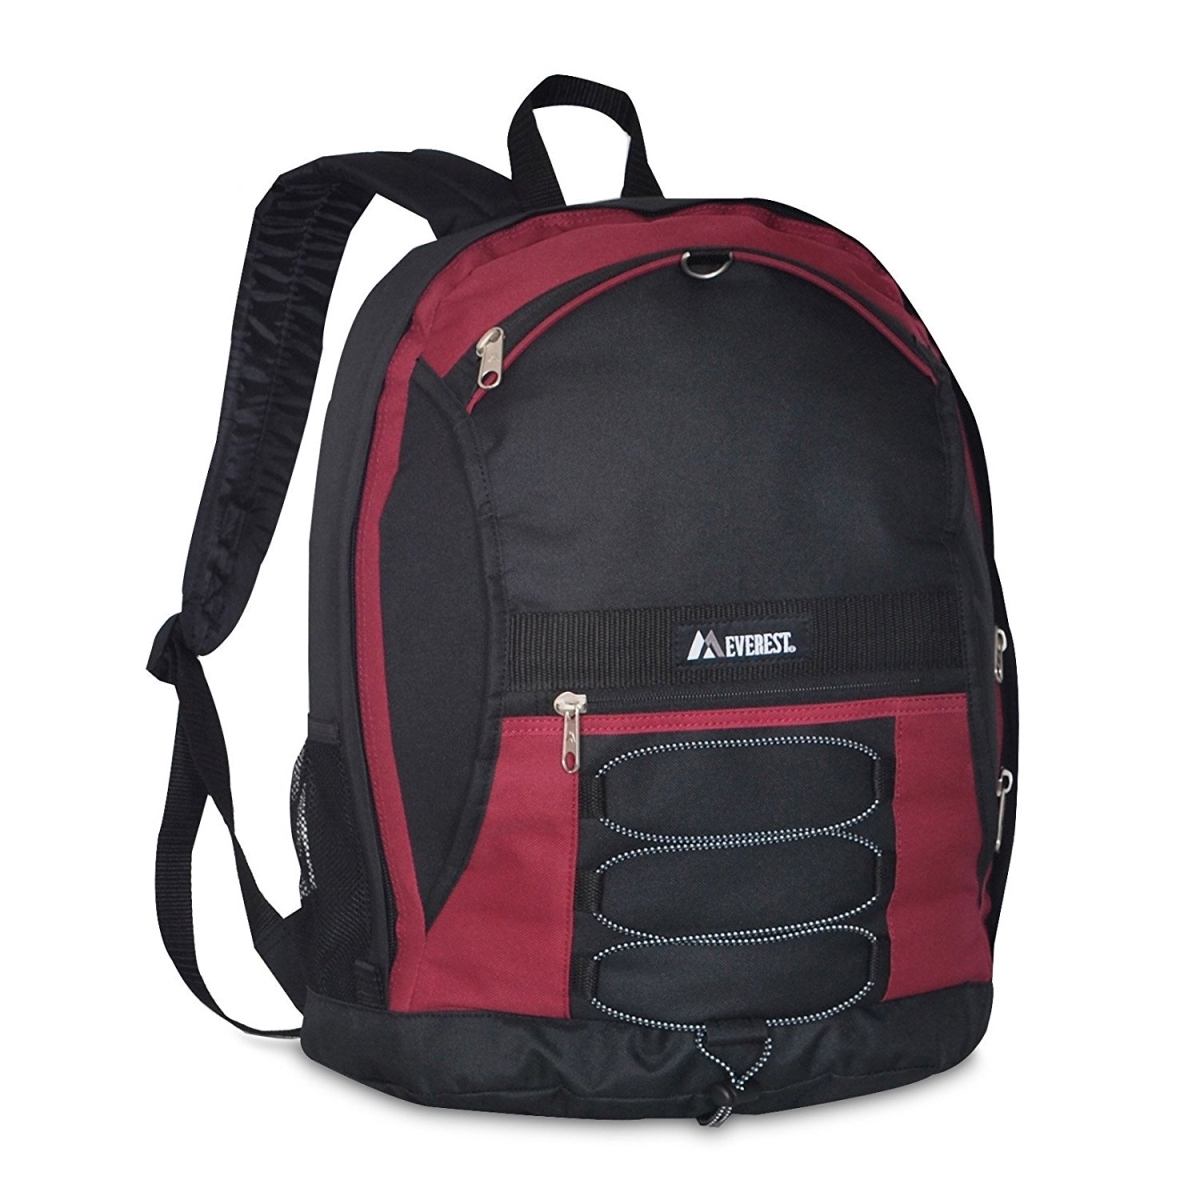 3045sh-burg-bk Two-tone Backpack With Mesh Pockets - Burgundy & Black